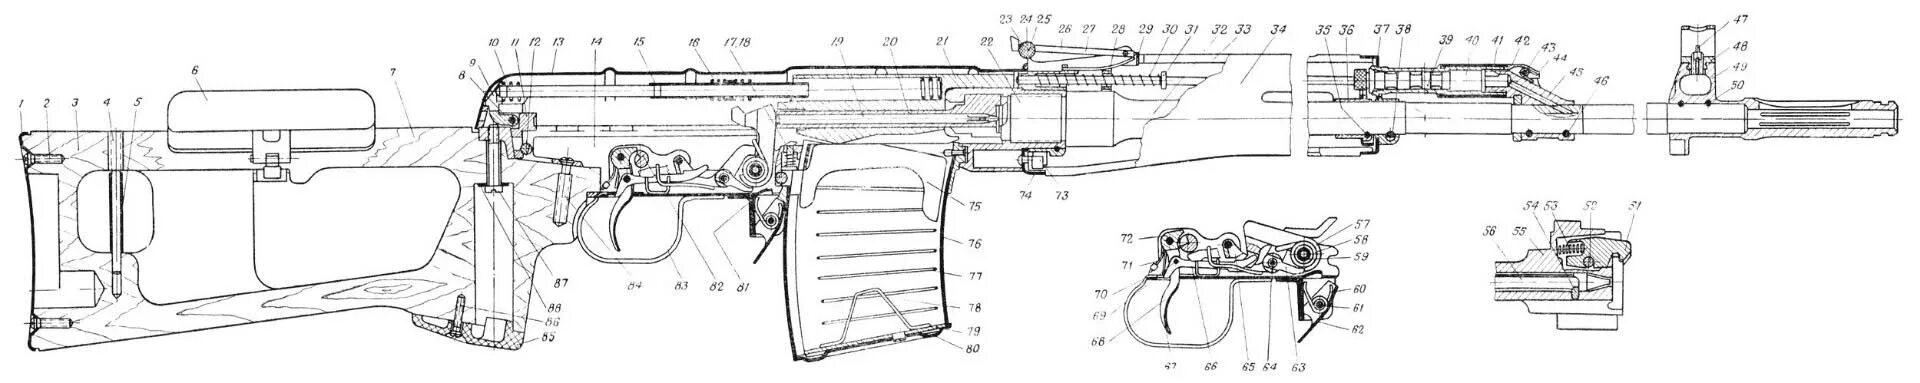 Диаметр ствола СВД чертеж. Снайперская винтовка Драгунова чертеж. Снайперская винтовка СВД чертеж. СВД винтовка чертеж. Размеры свд